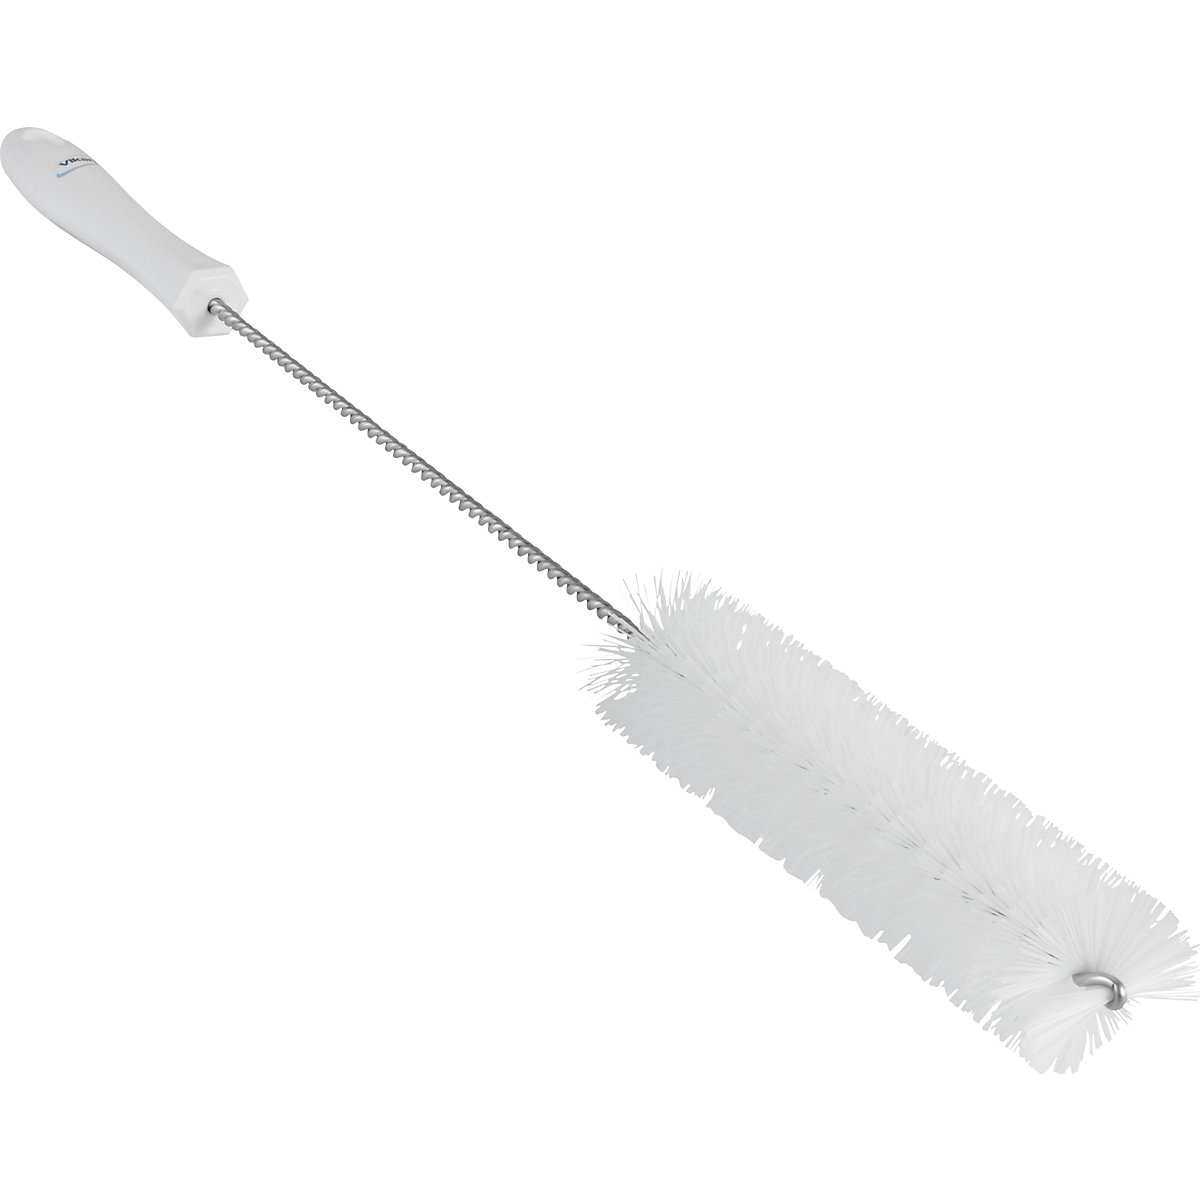 Pipe brush with handle - Vikan